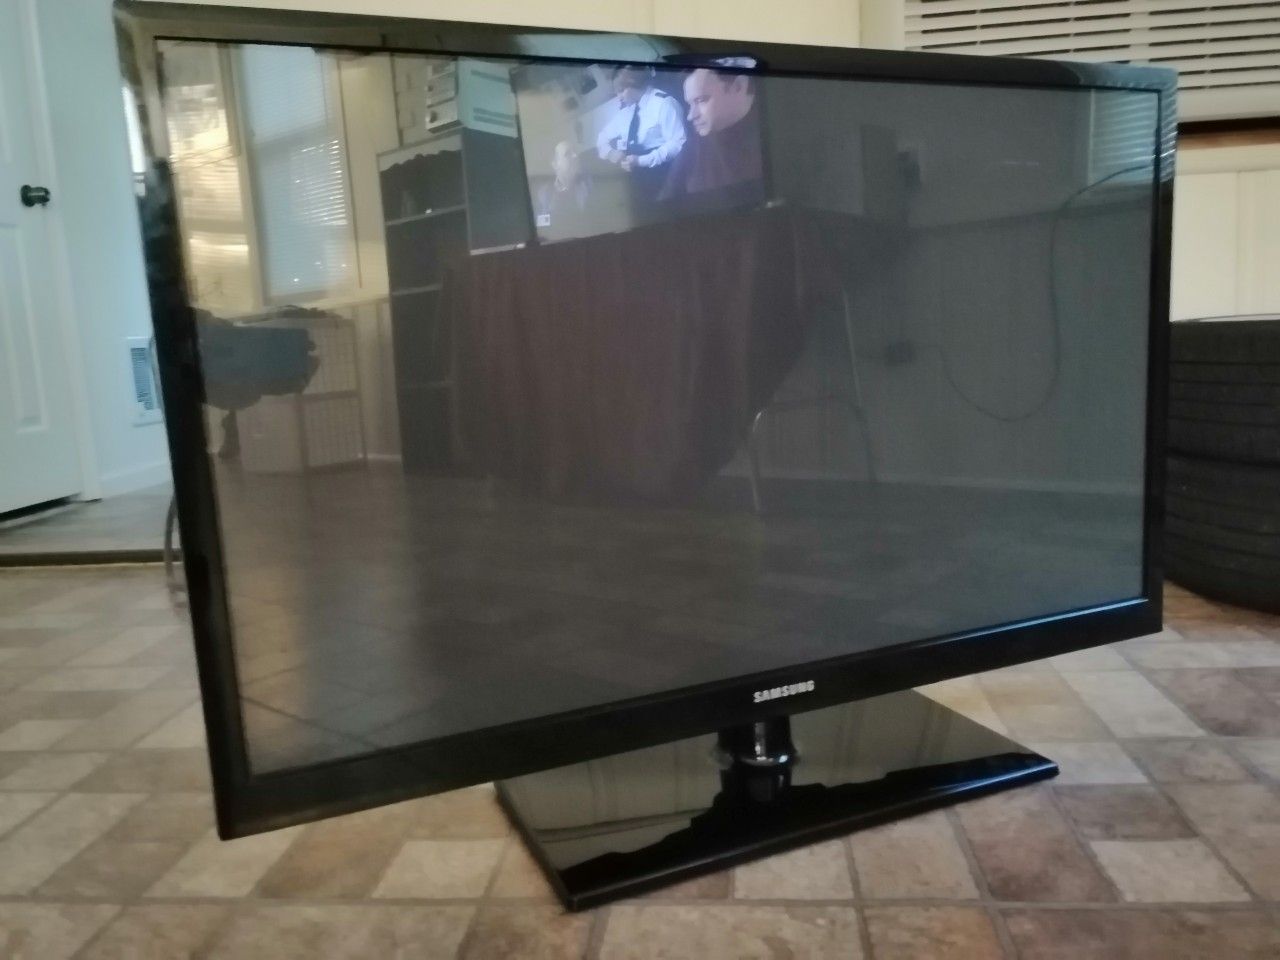 43 inch Samsung Flat screen TV